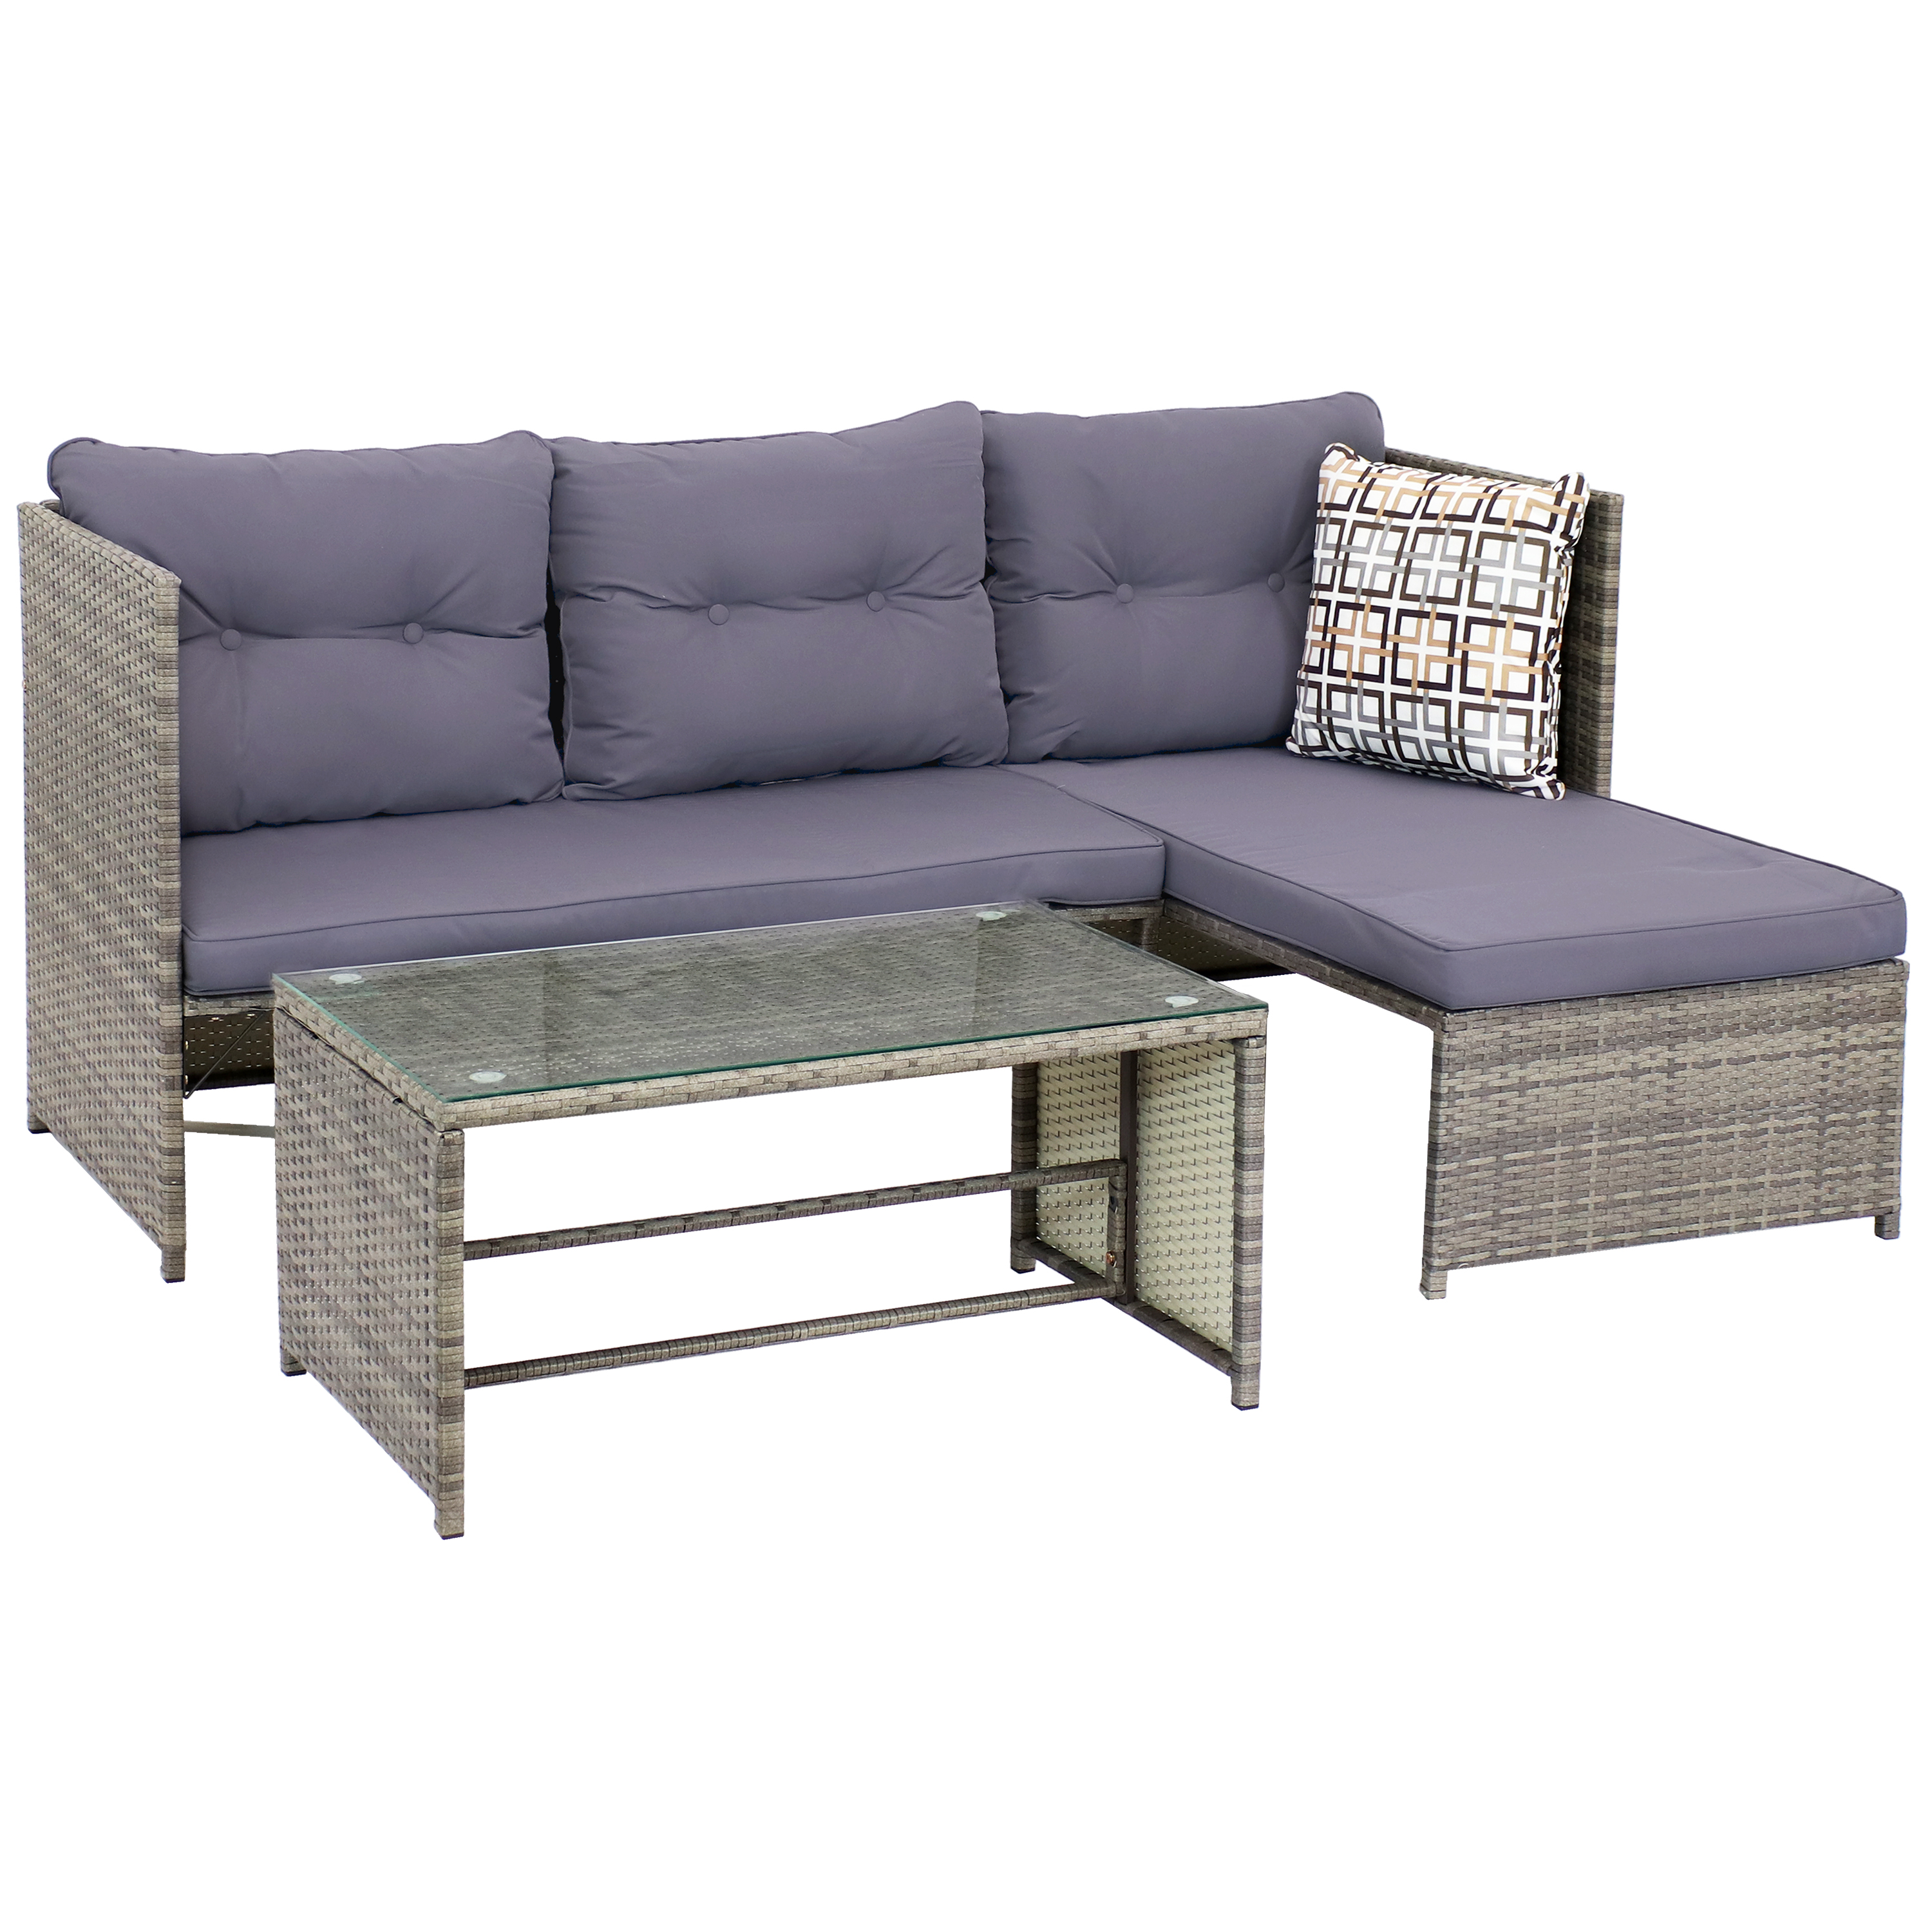 Sunnydaze Longford Rattan Chaise Sofa Patio Sectional Furniture Set - Charcoal